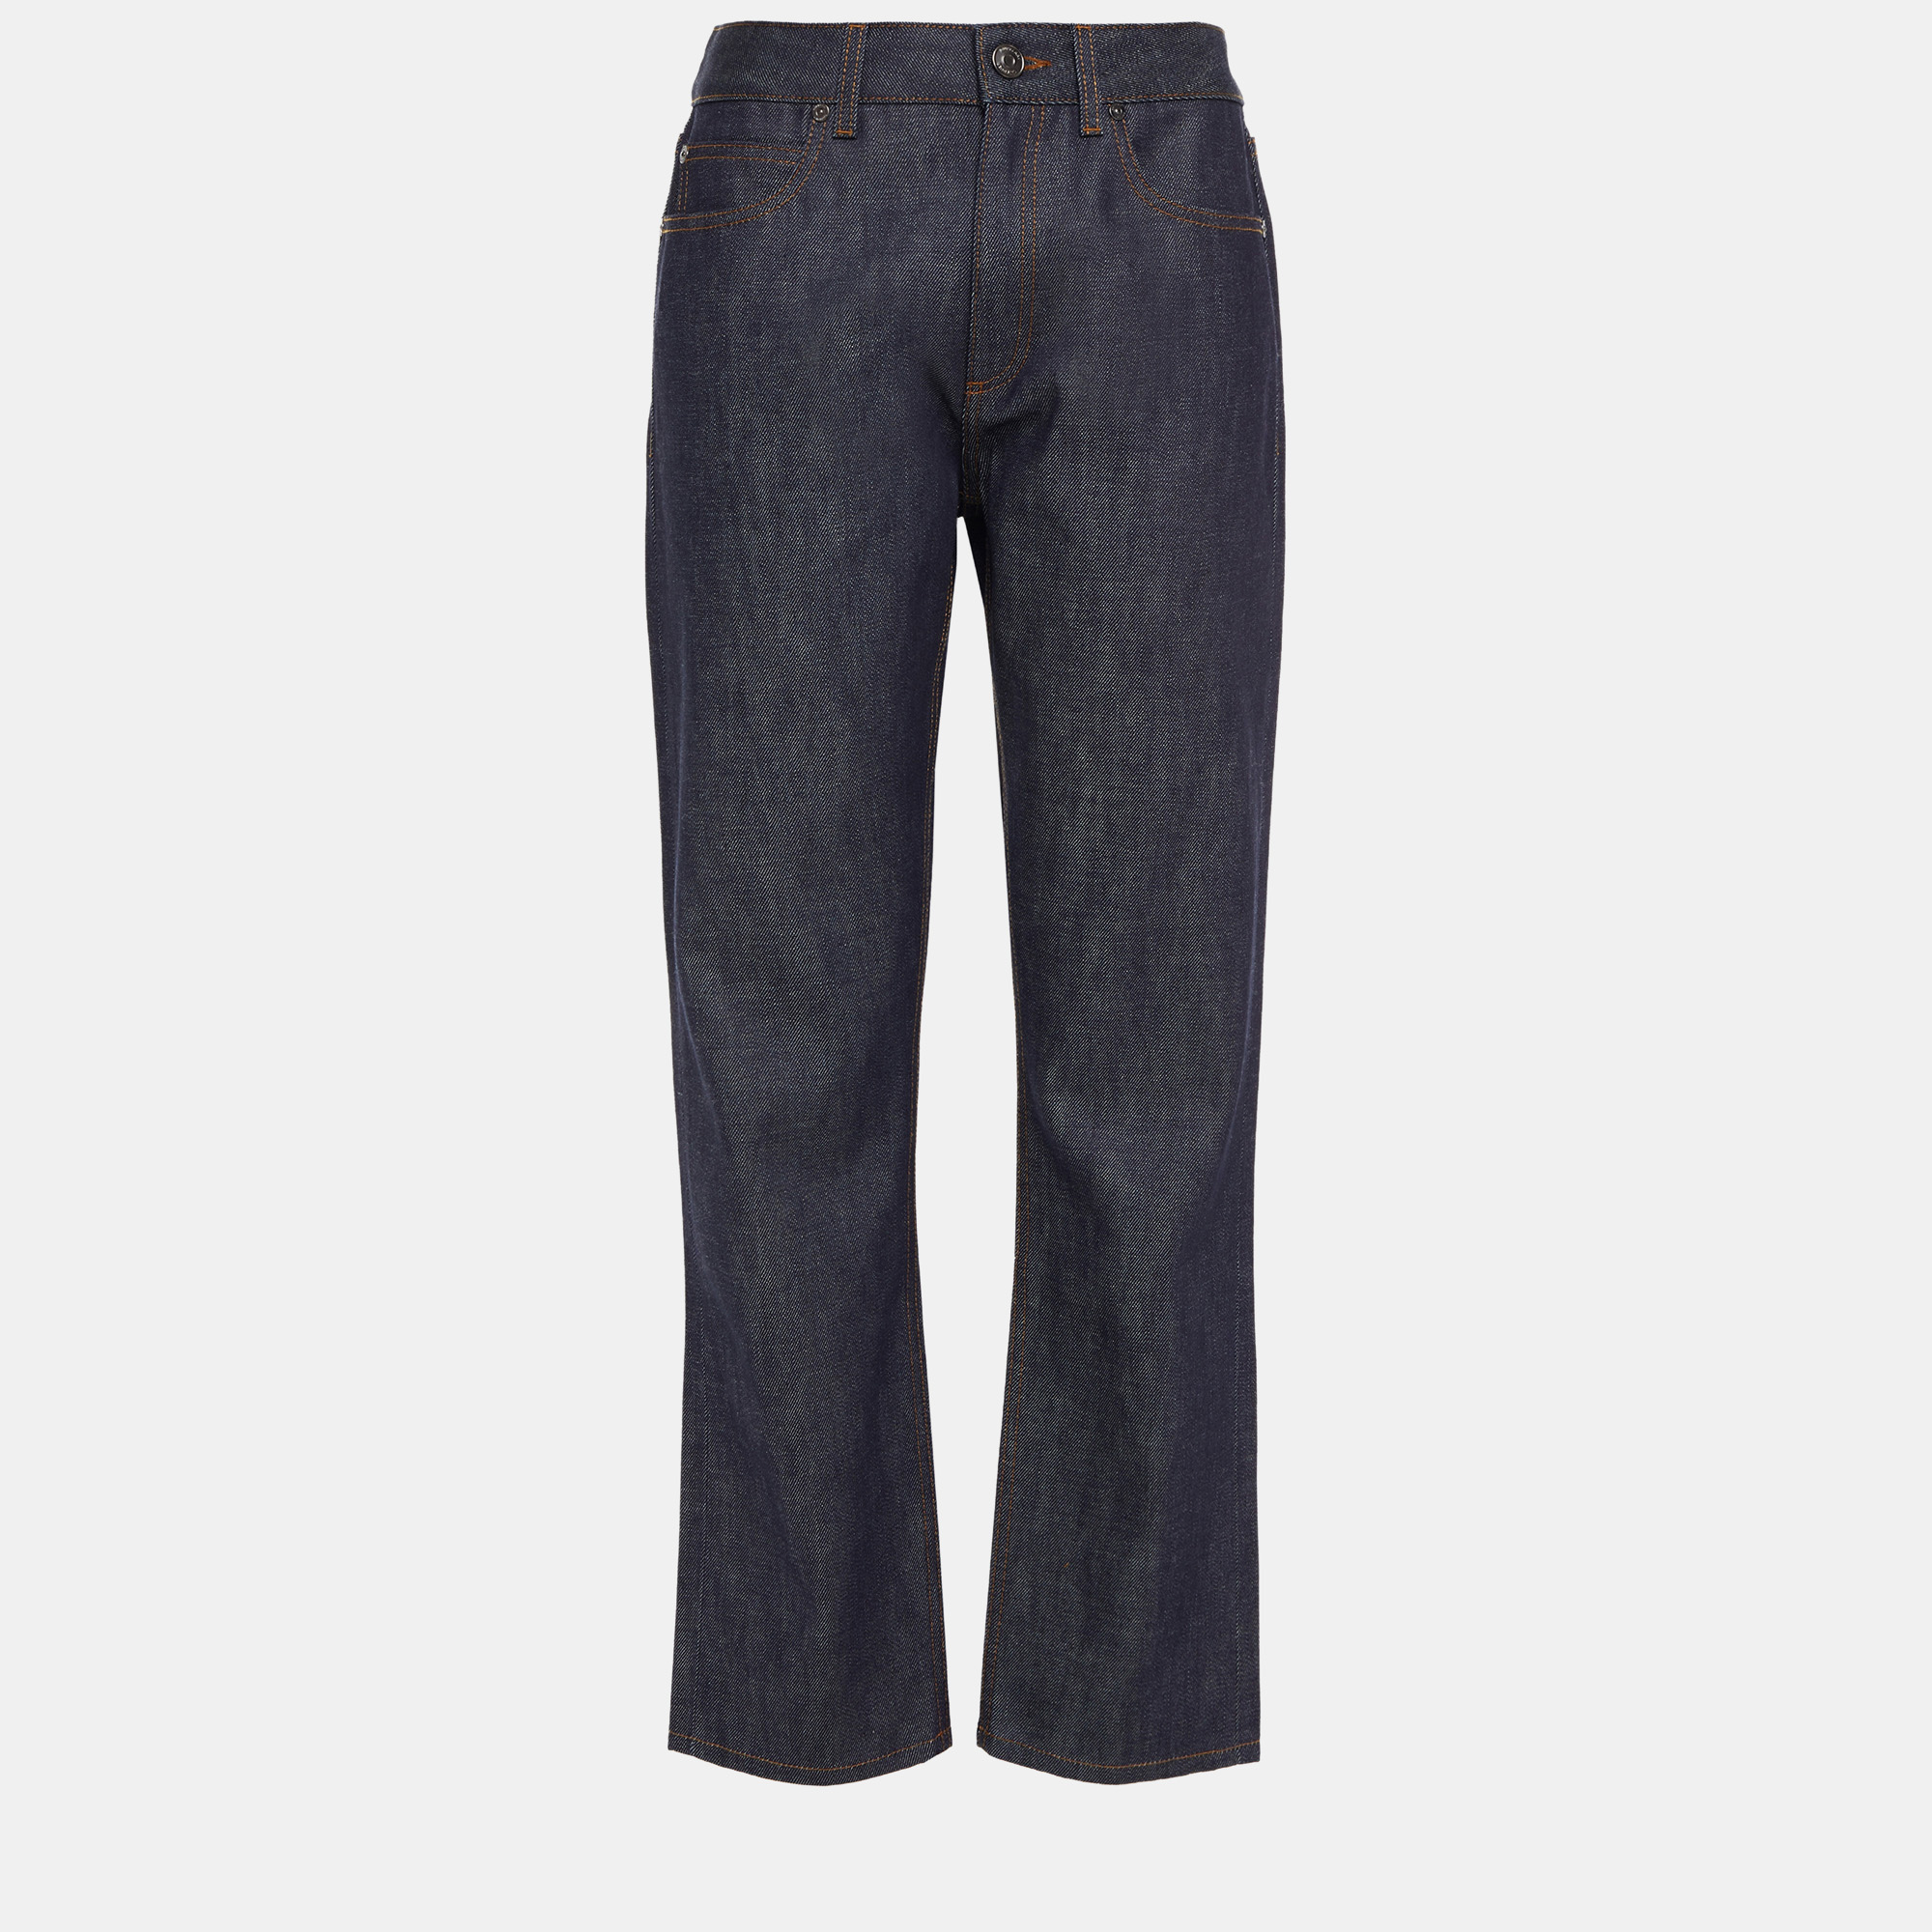 Burberry cotton straight leg jeans 28